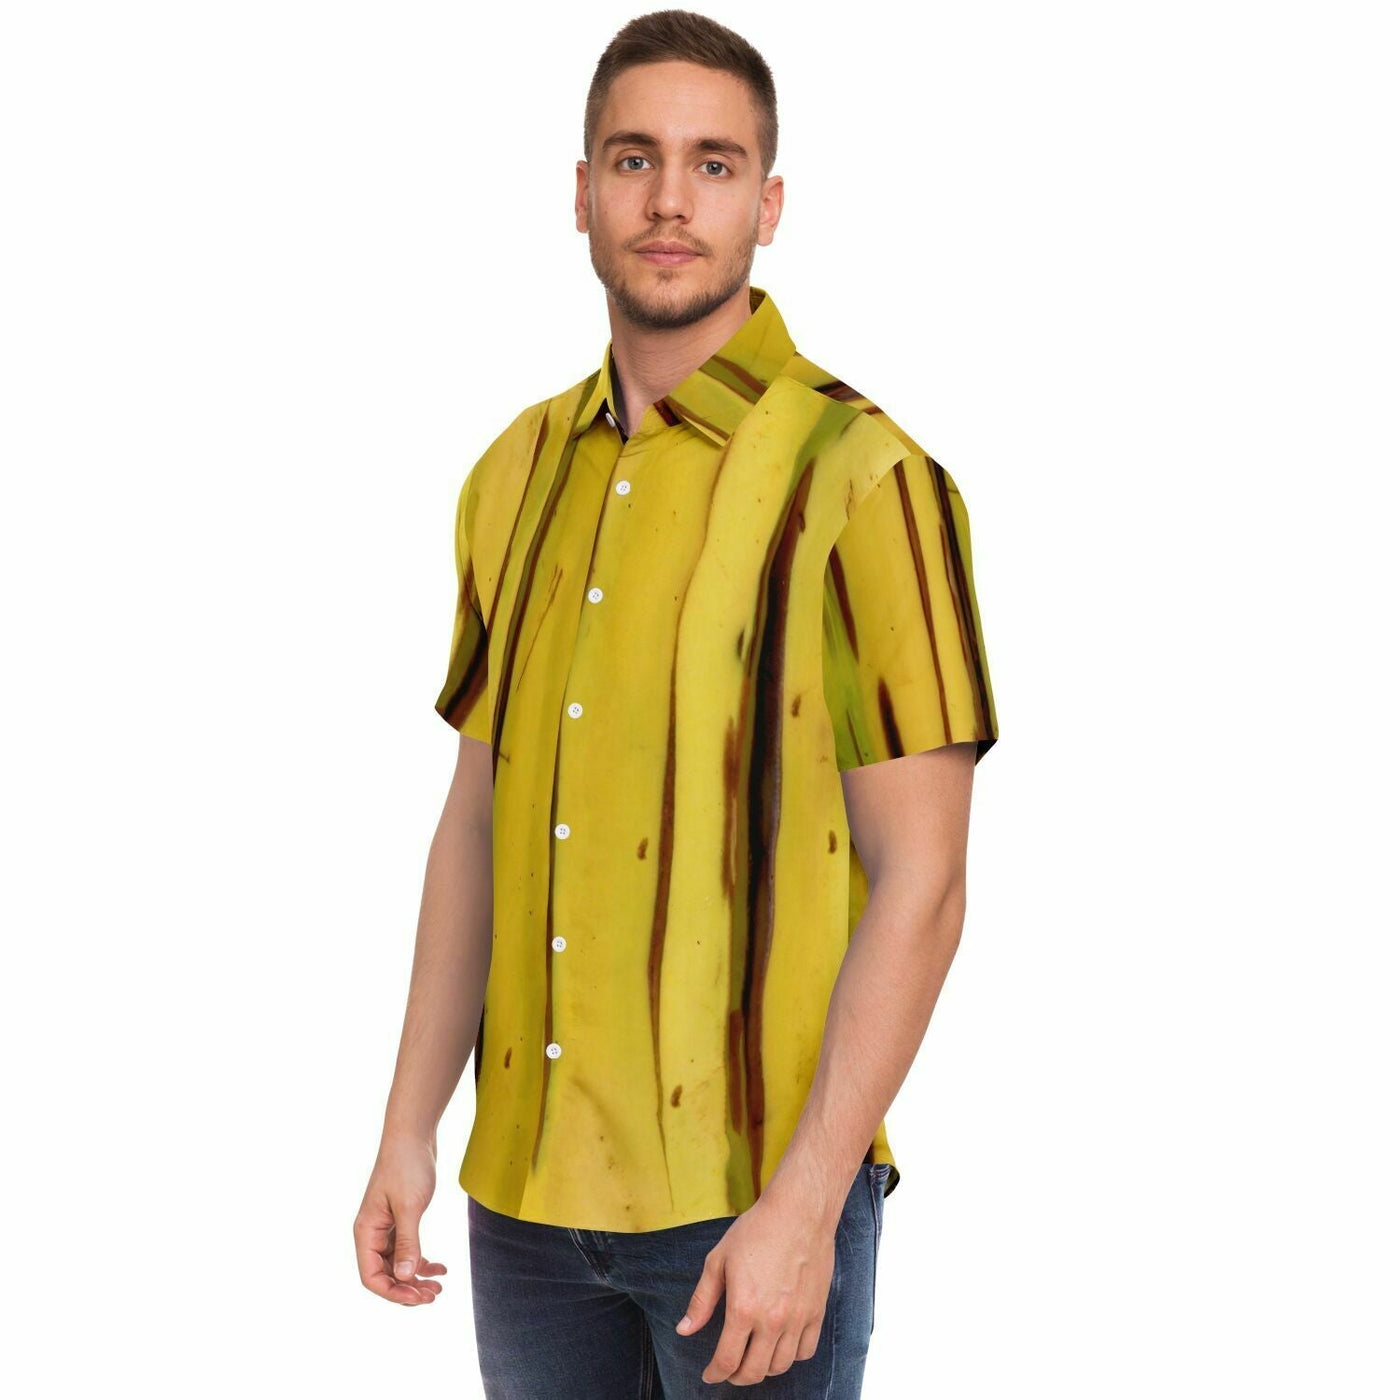 I'm Banana - Banana Peel Pattern Short Sleeve Shirt